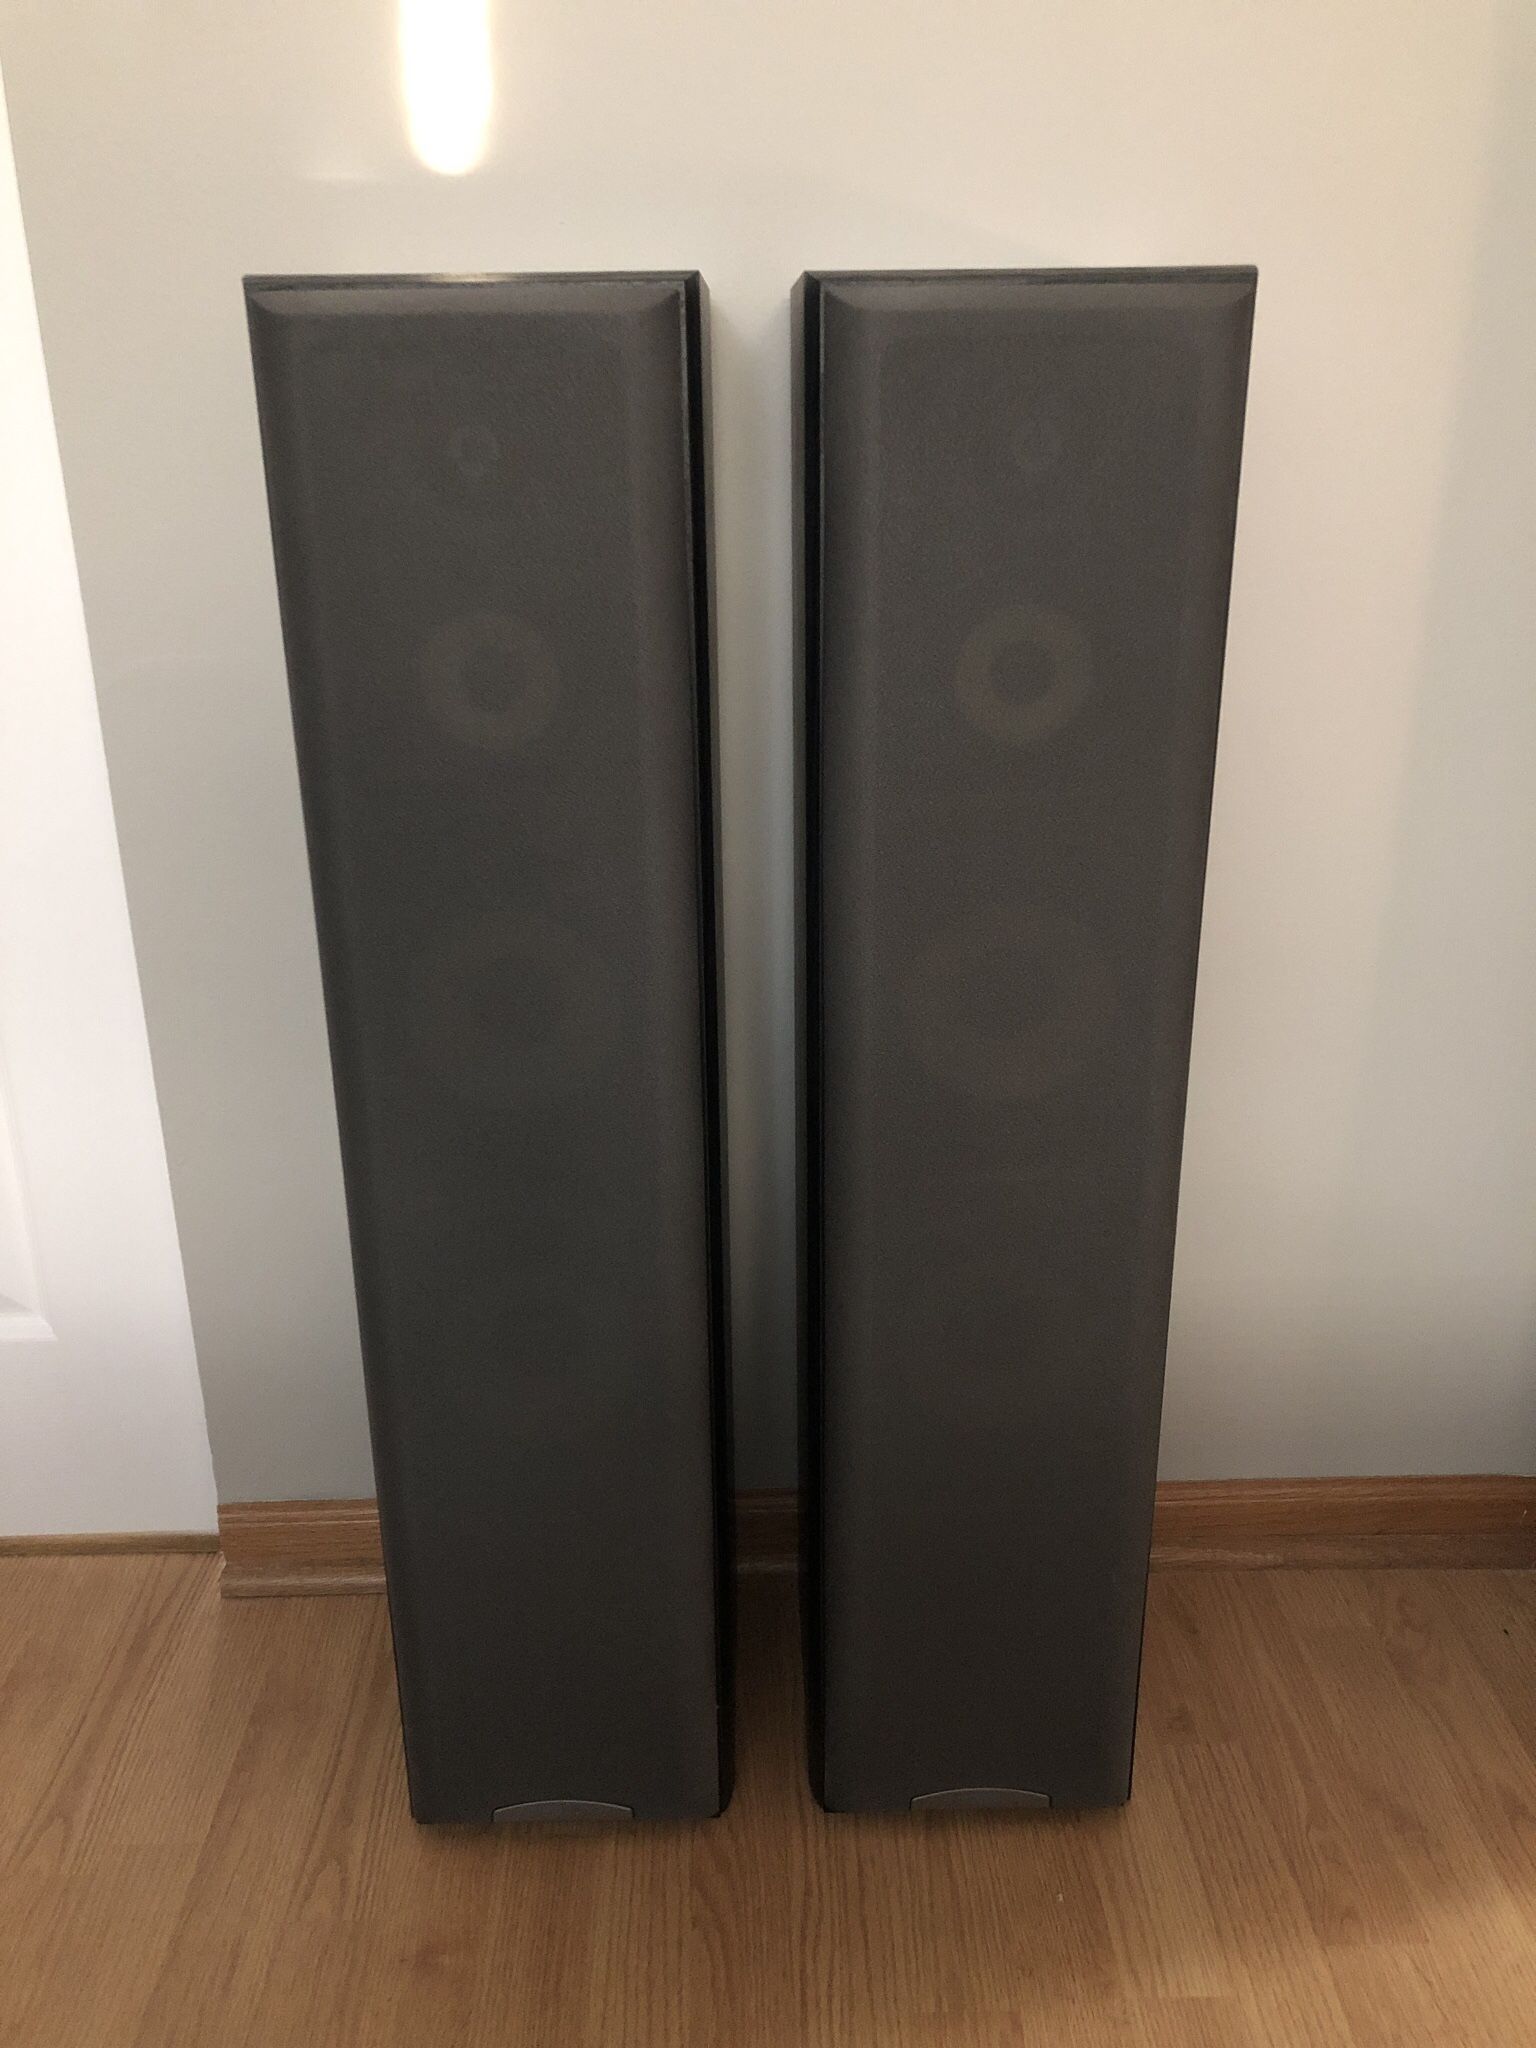 Sony SS-MF650H Floor Speakers